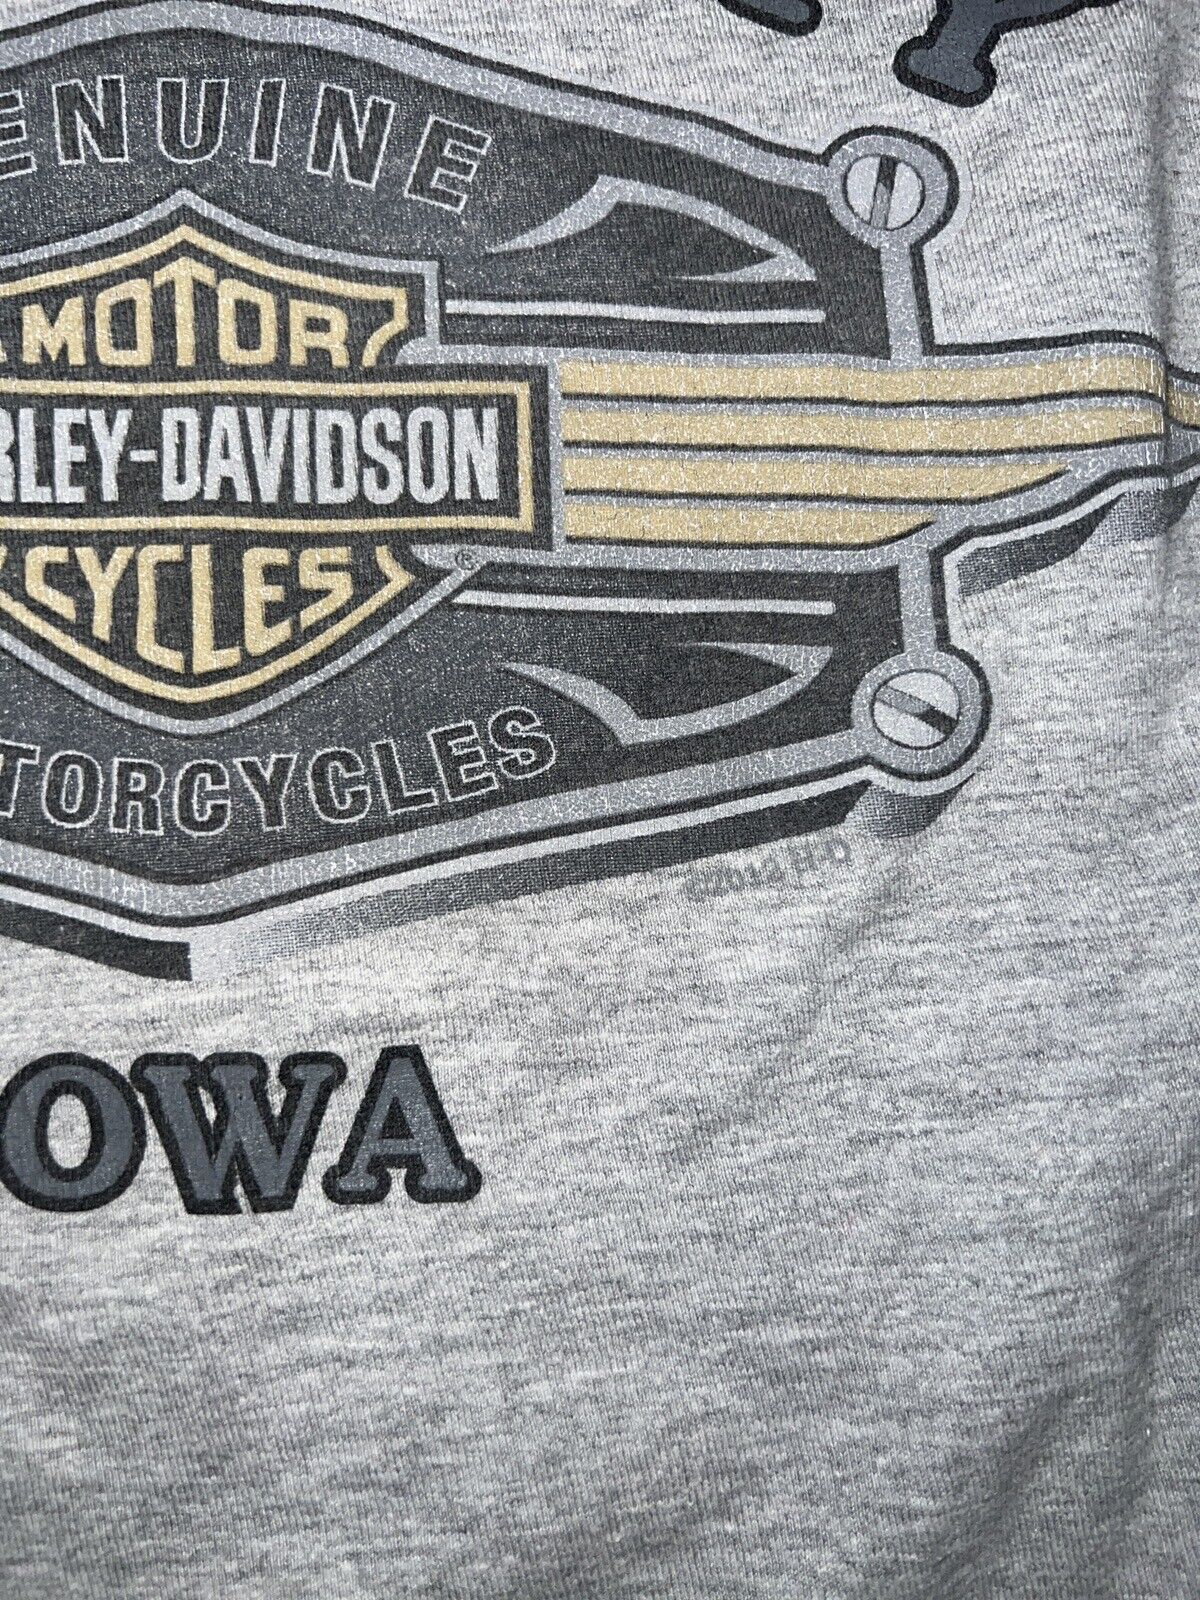 Harley Davidson 2013 Gray Long Sleeve - image 7